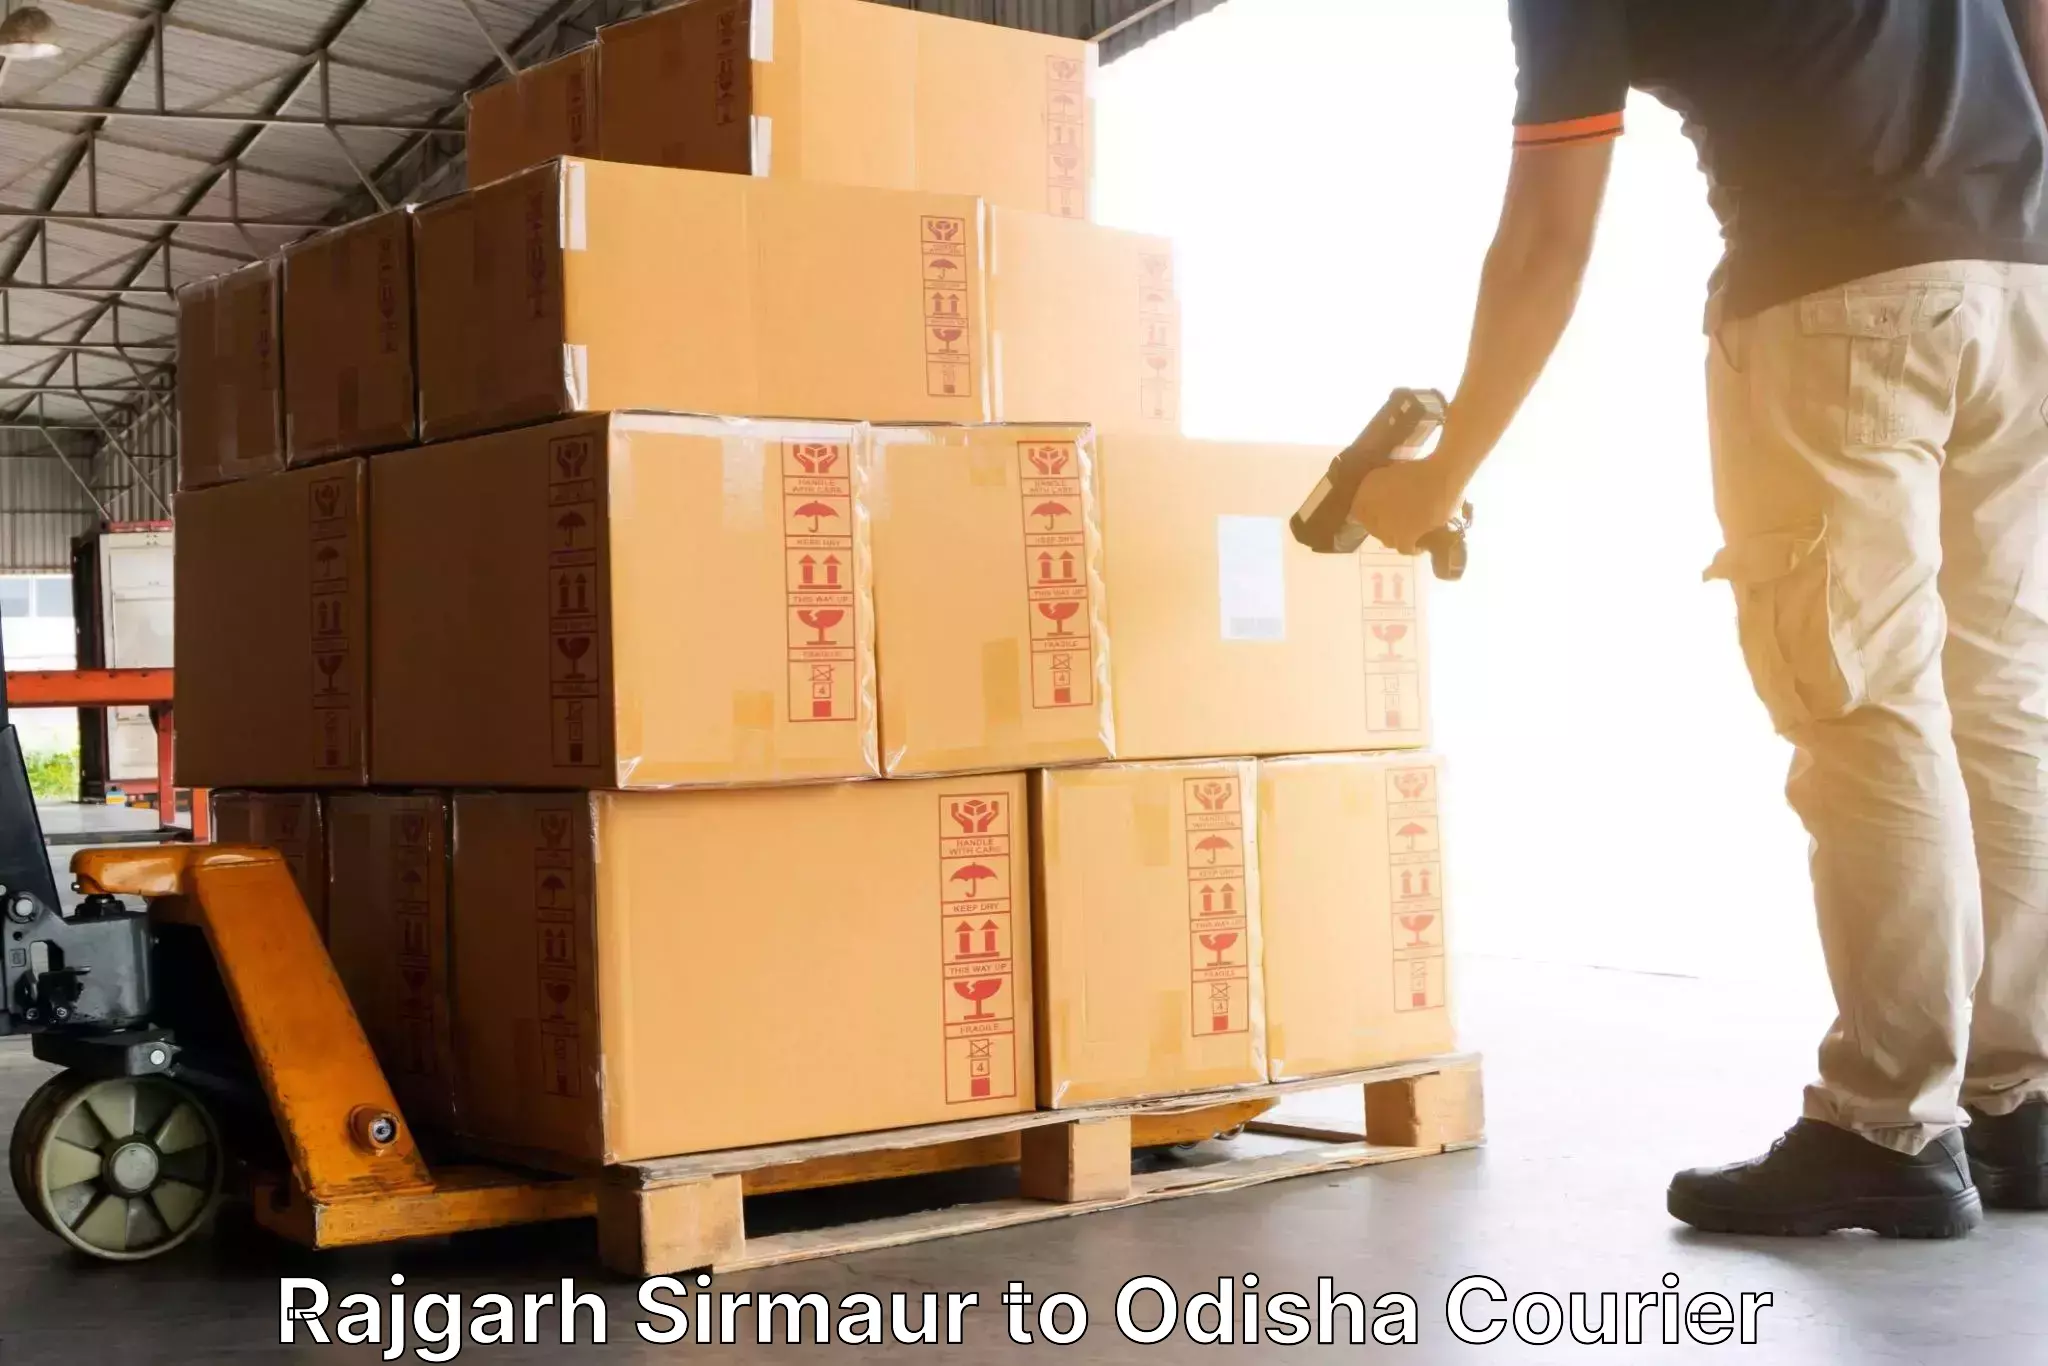 Courier service booking Rajgarh Sirmaur to Bhadrak